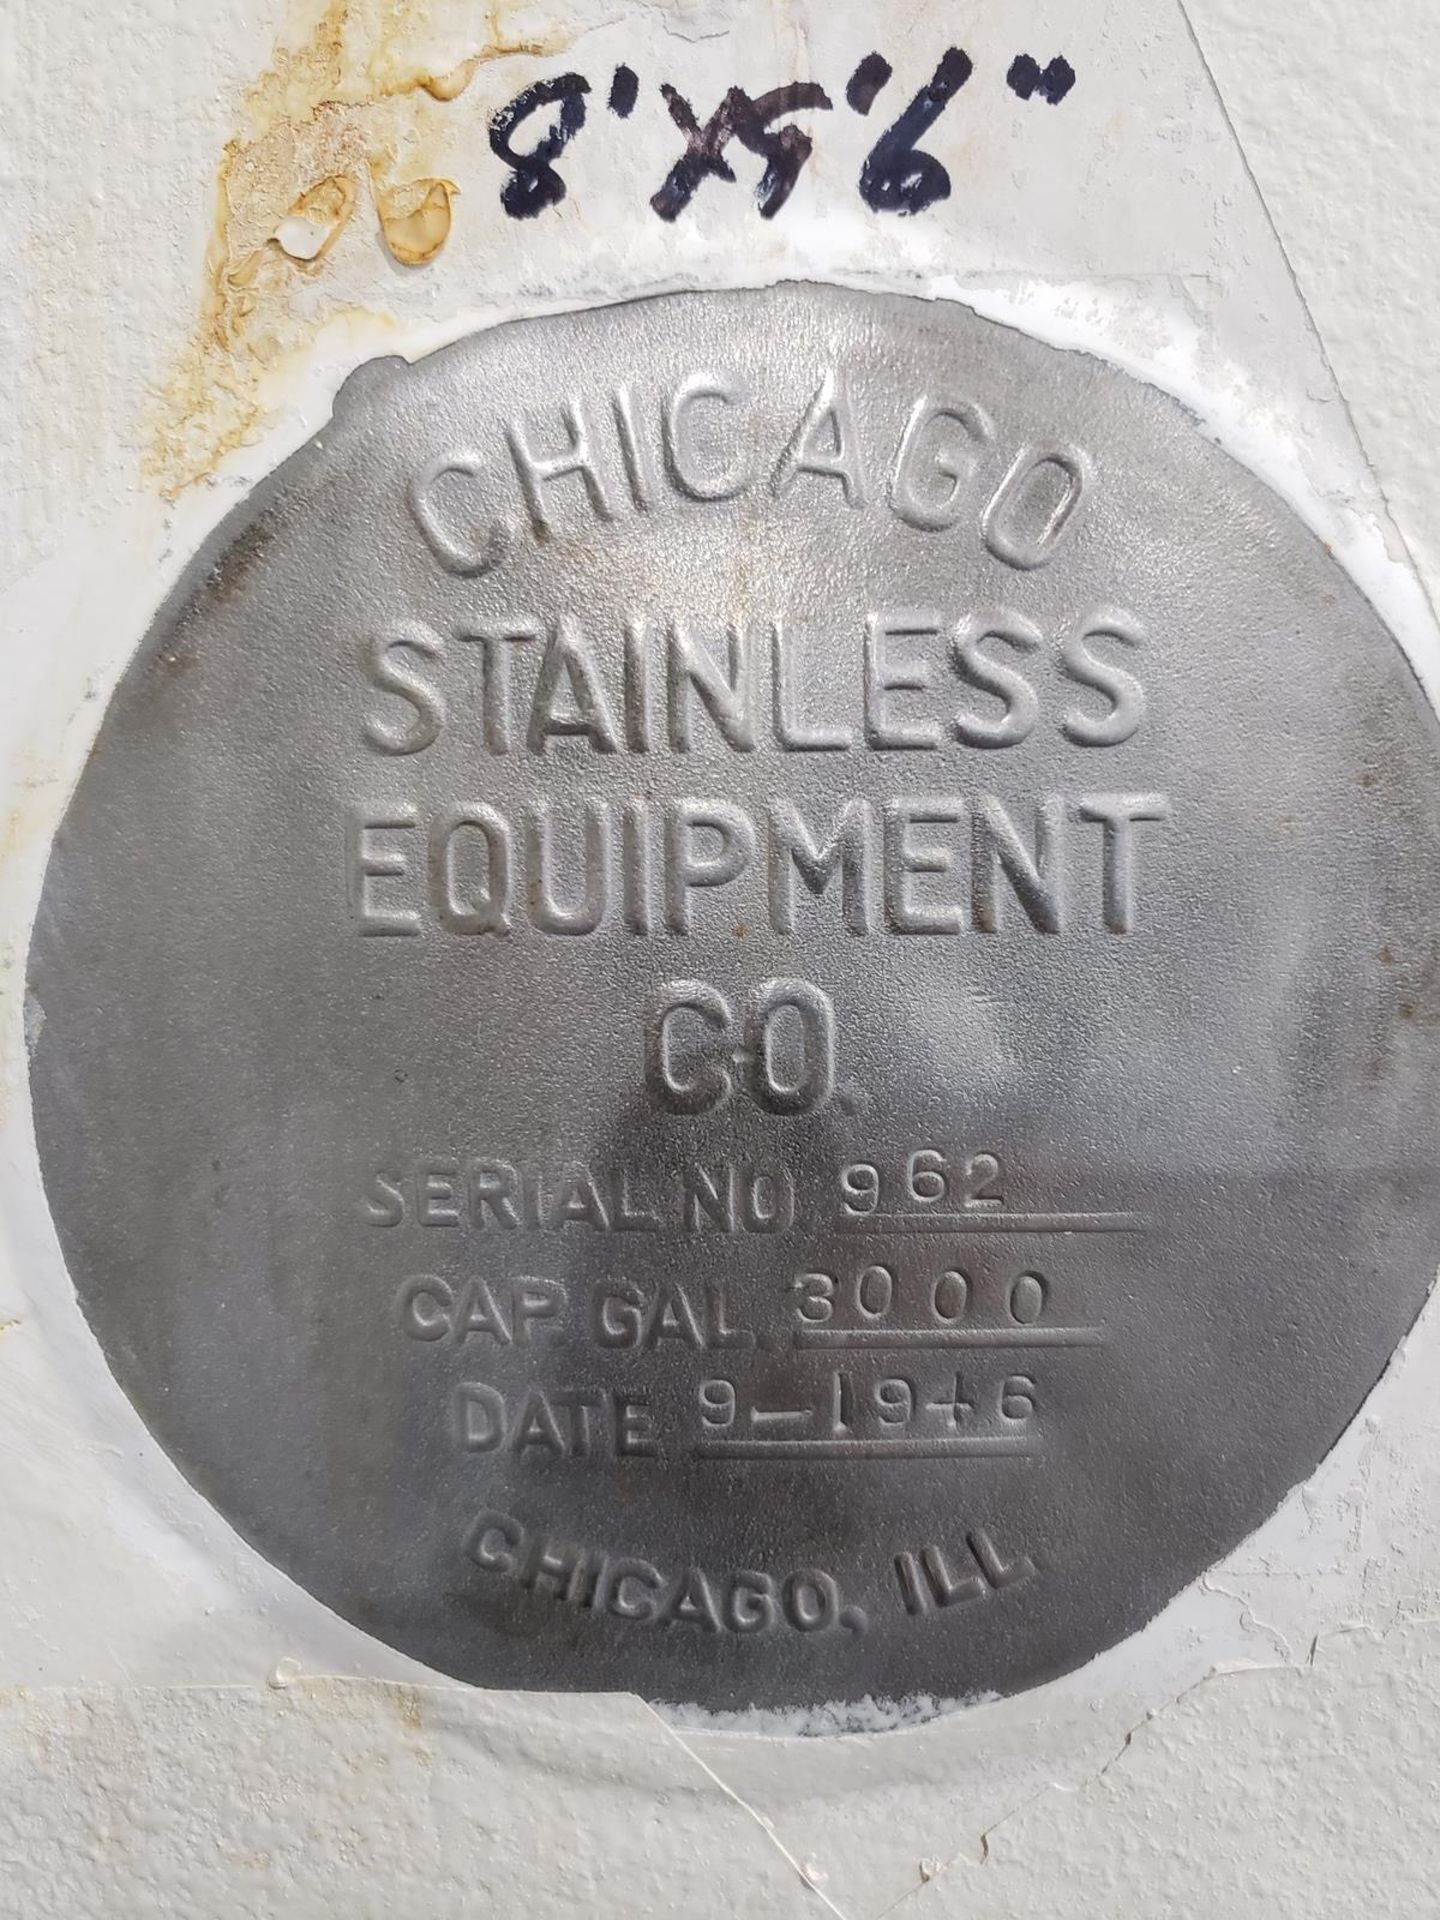 Chicago Stainless 3,000 Gallon Horizontal Storage Tank | Rig Fee: $2200 - Image 2 of 3